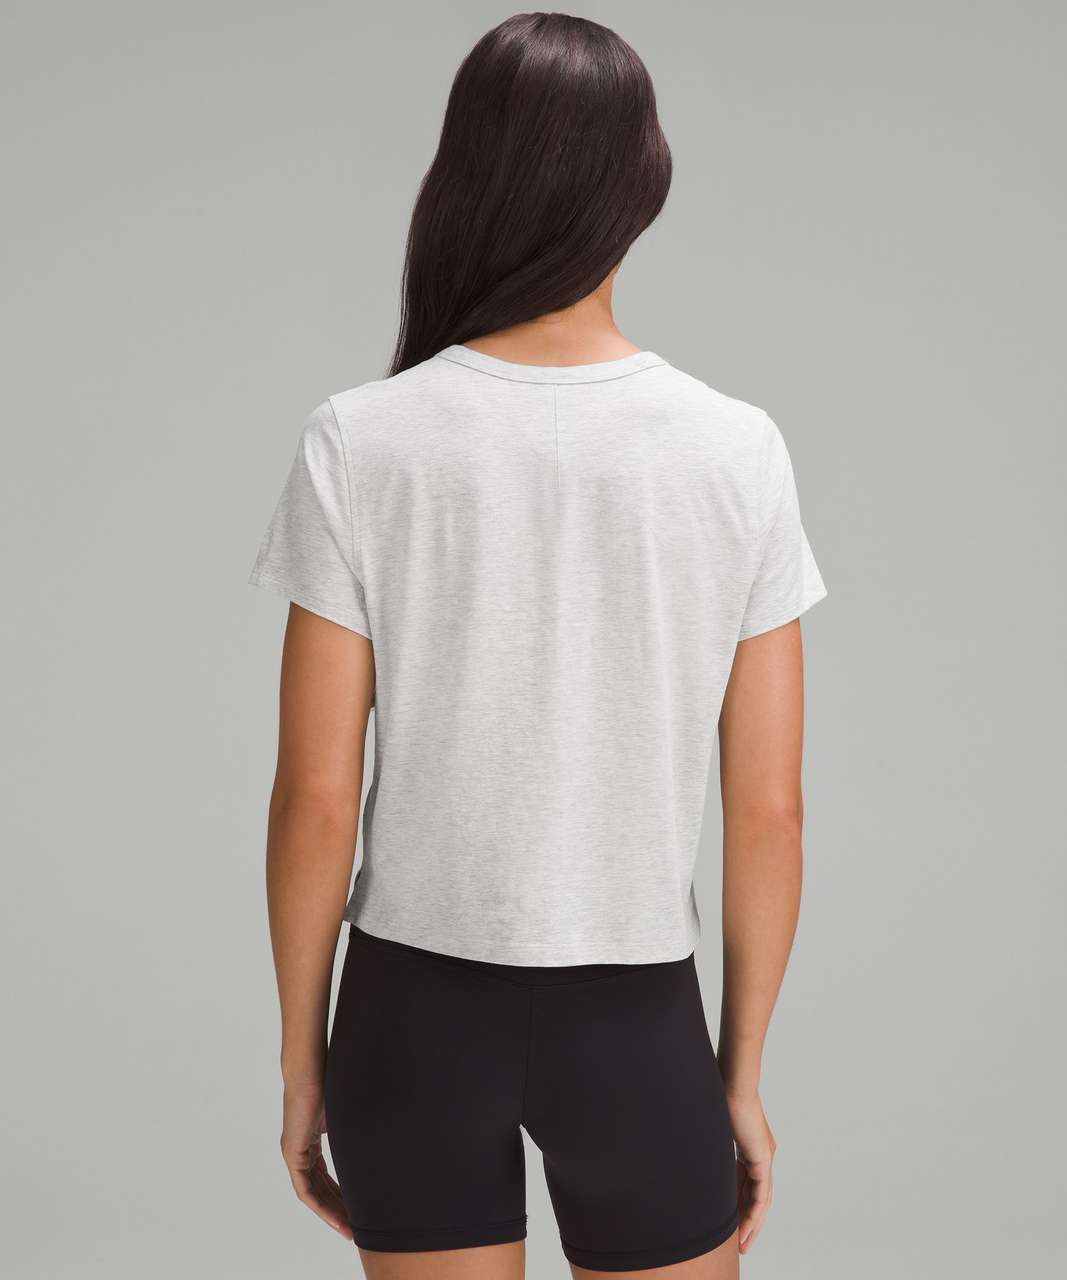 Lululemon Classic-Fit Cotton-Blend T-Shirt - Heathered Core Ultra Light Grey